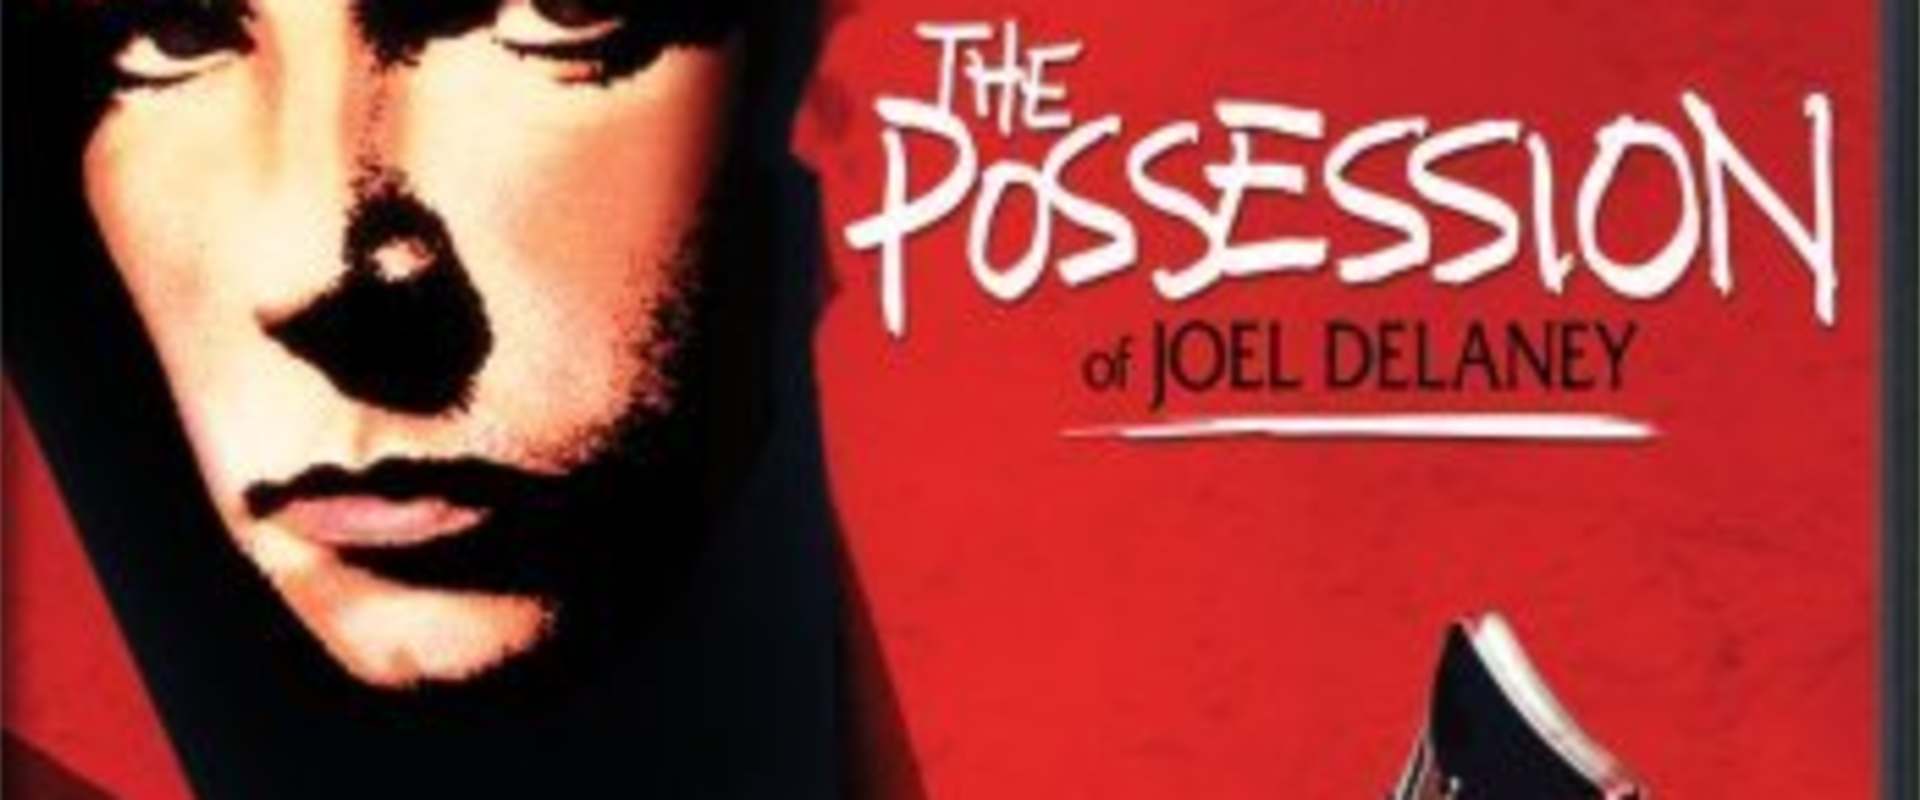 The Possession of Joel Delaney background 1